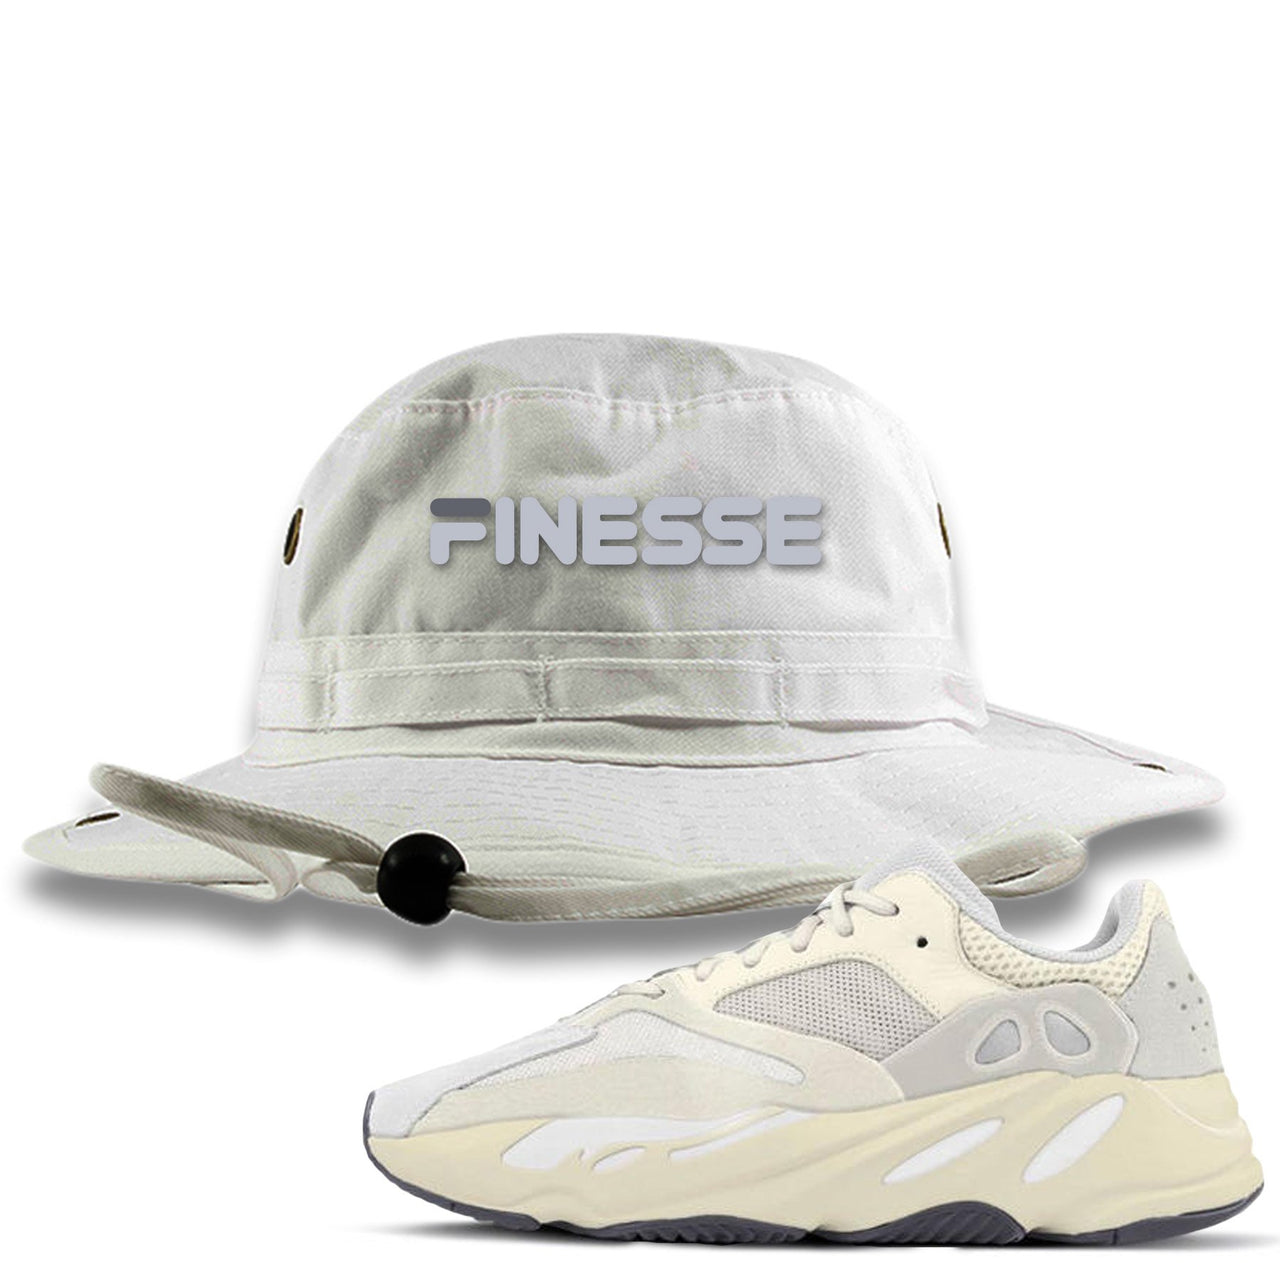 Analog 700s Bucket Hat | Finesse, White